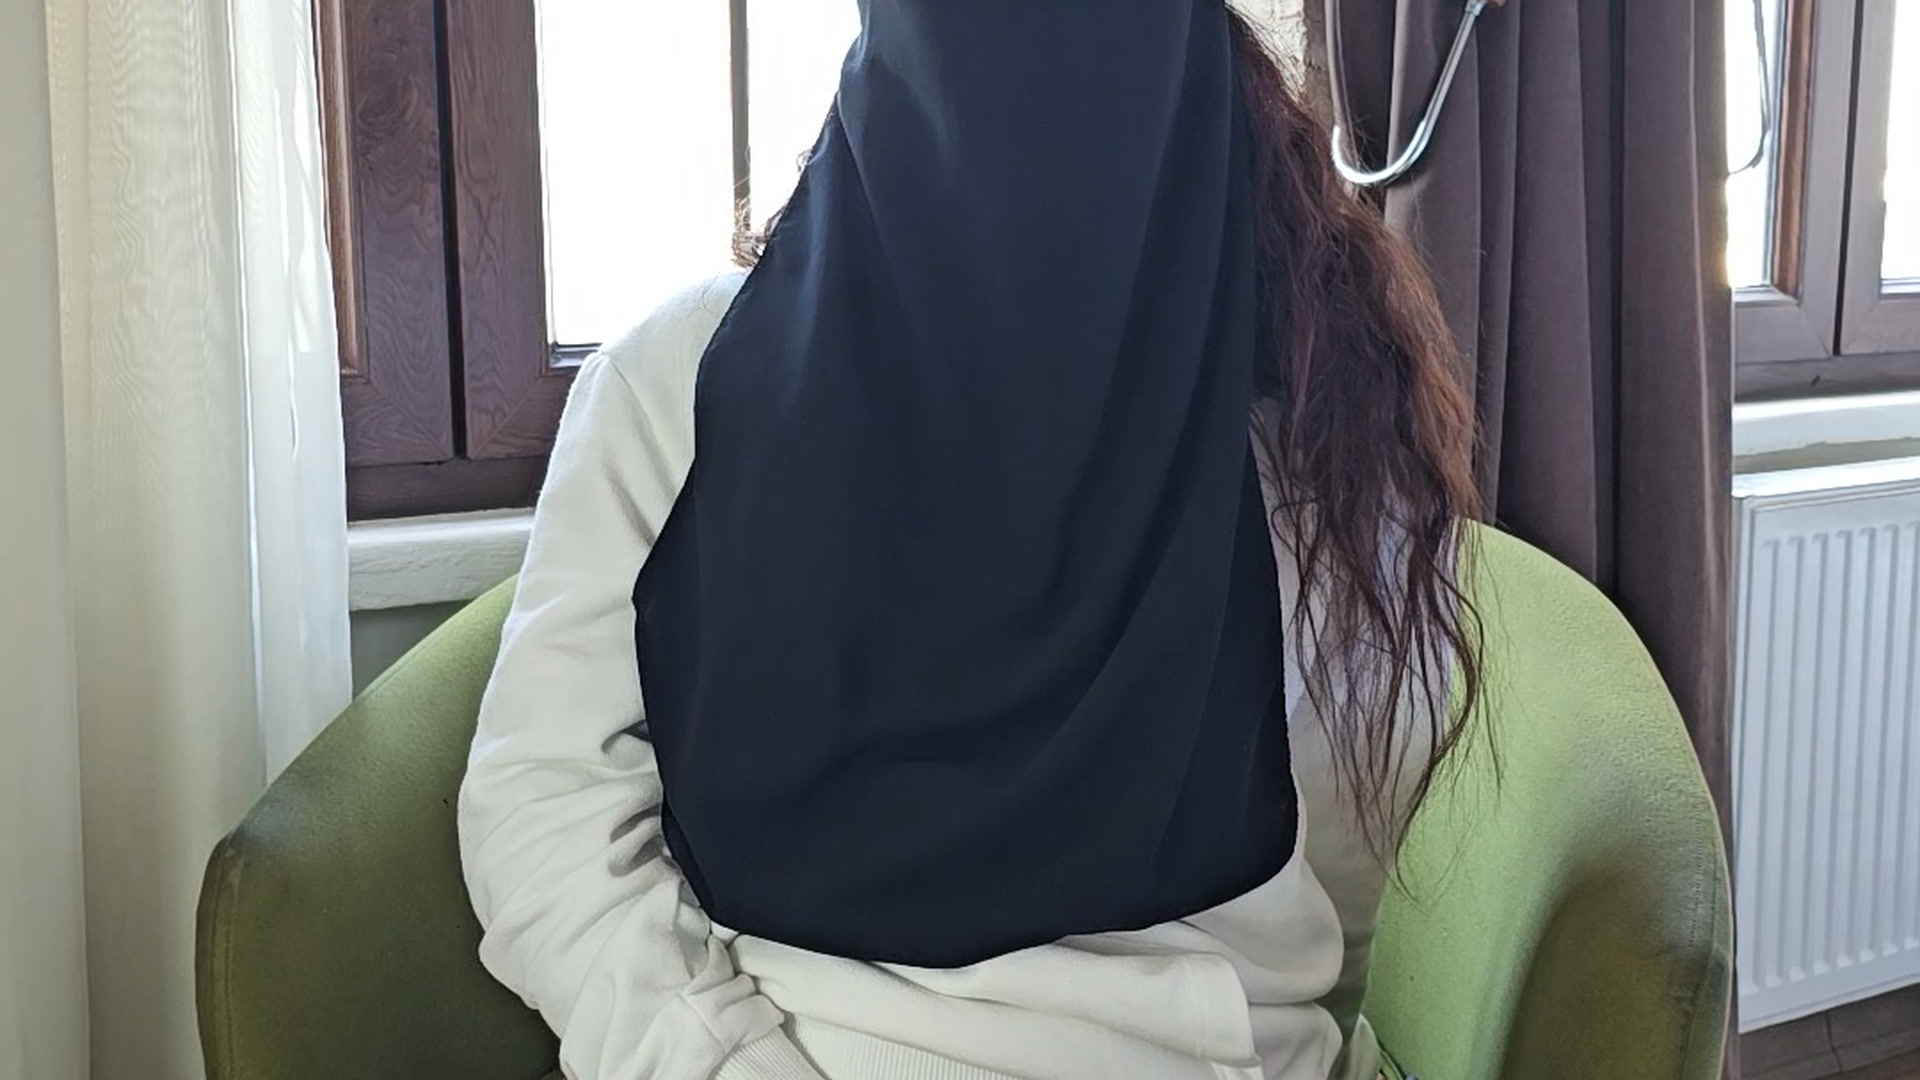 Muslim girl fingers her dripping pussy on cam - Jasmine SweetArabic